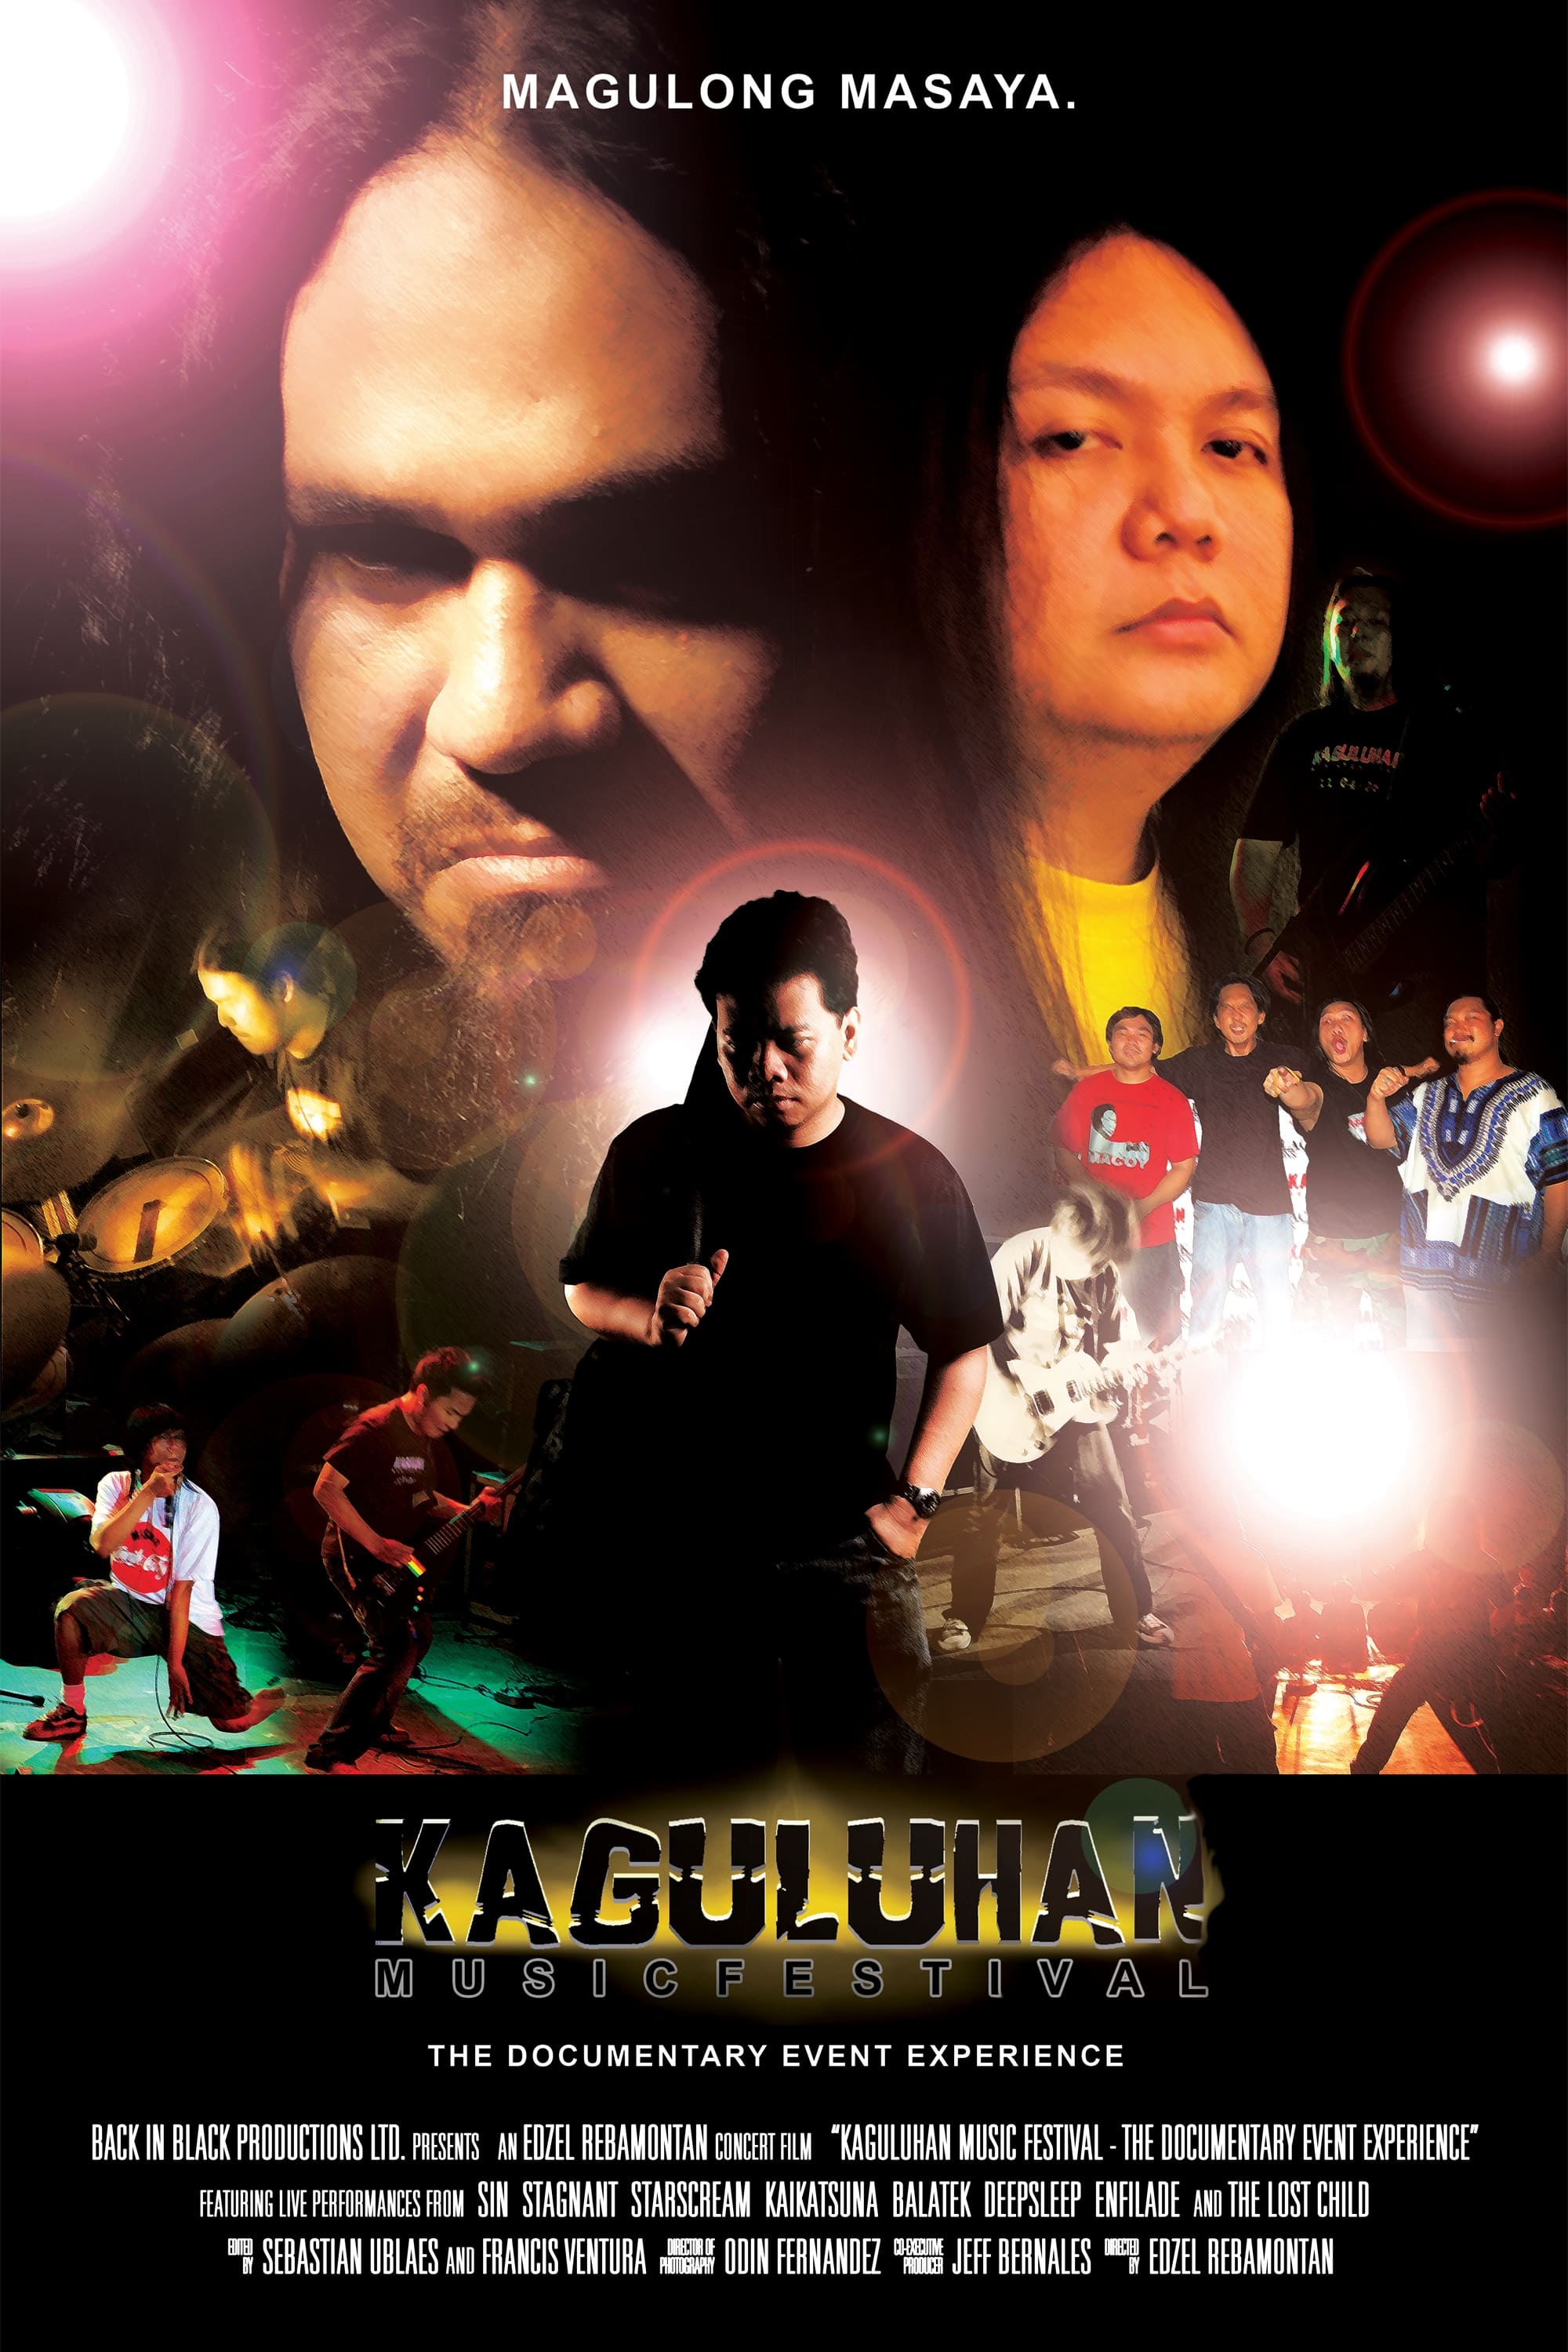 Kaguluhan Music Festival: The Documentary Event Experience